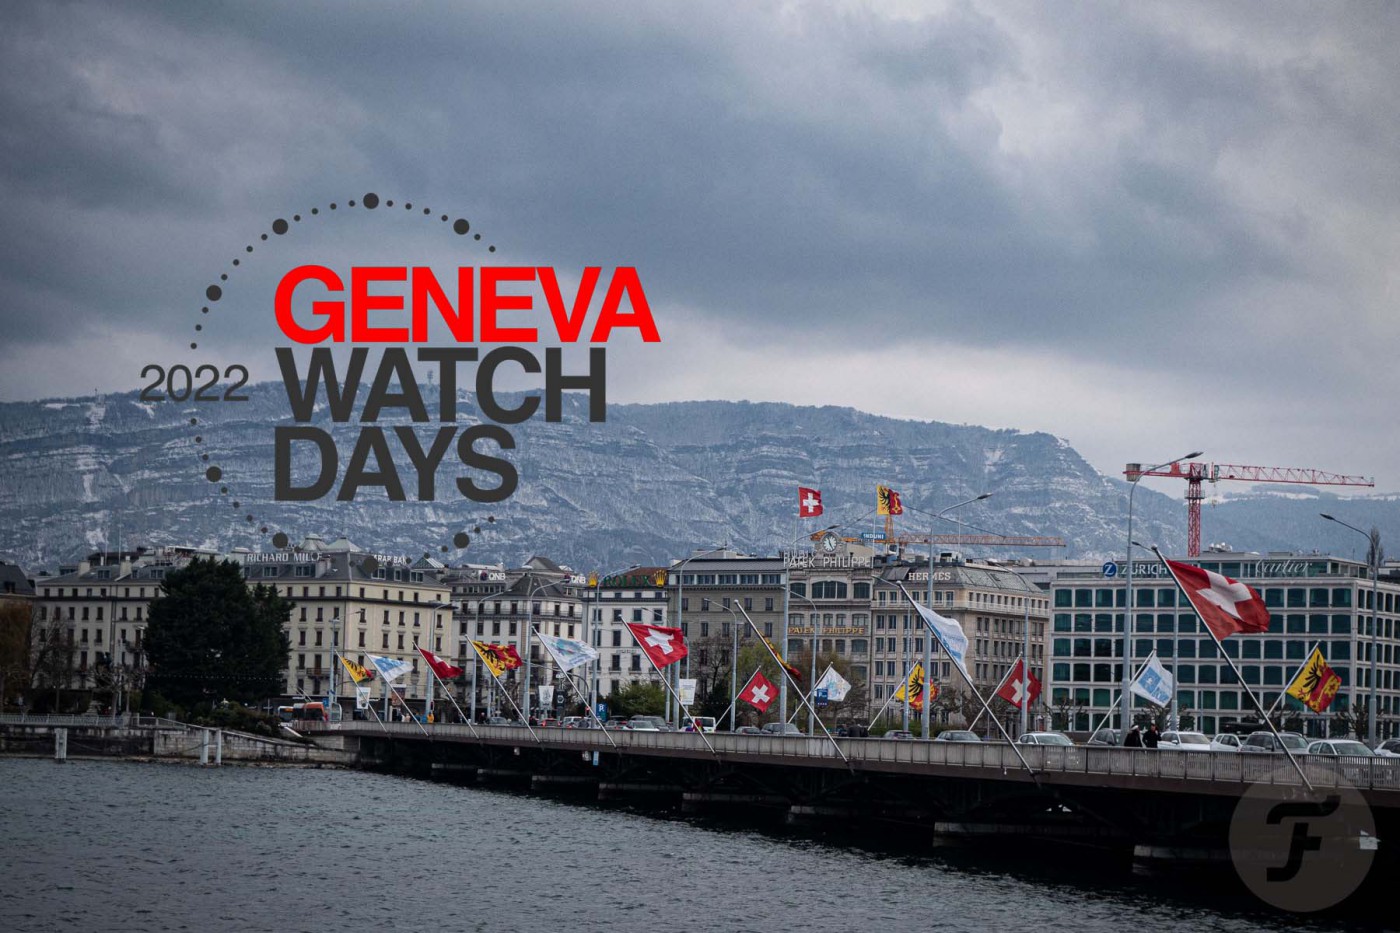 Geneva-Watch-Days-2022-cover-.jpg